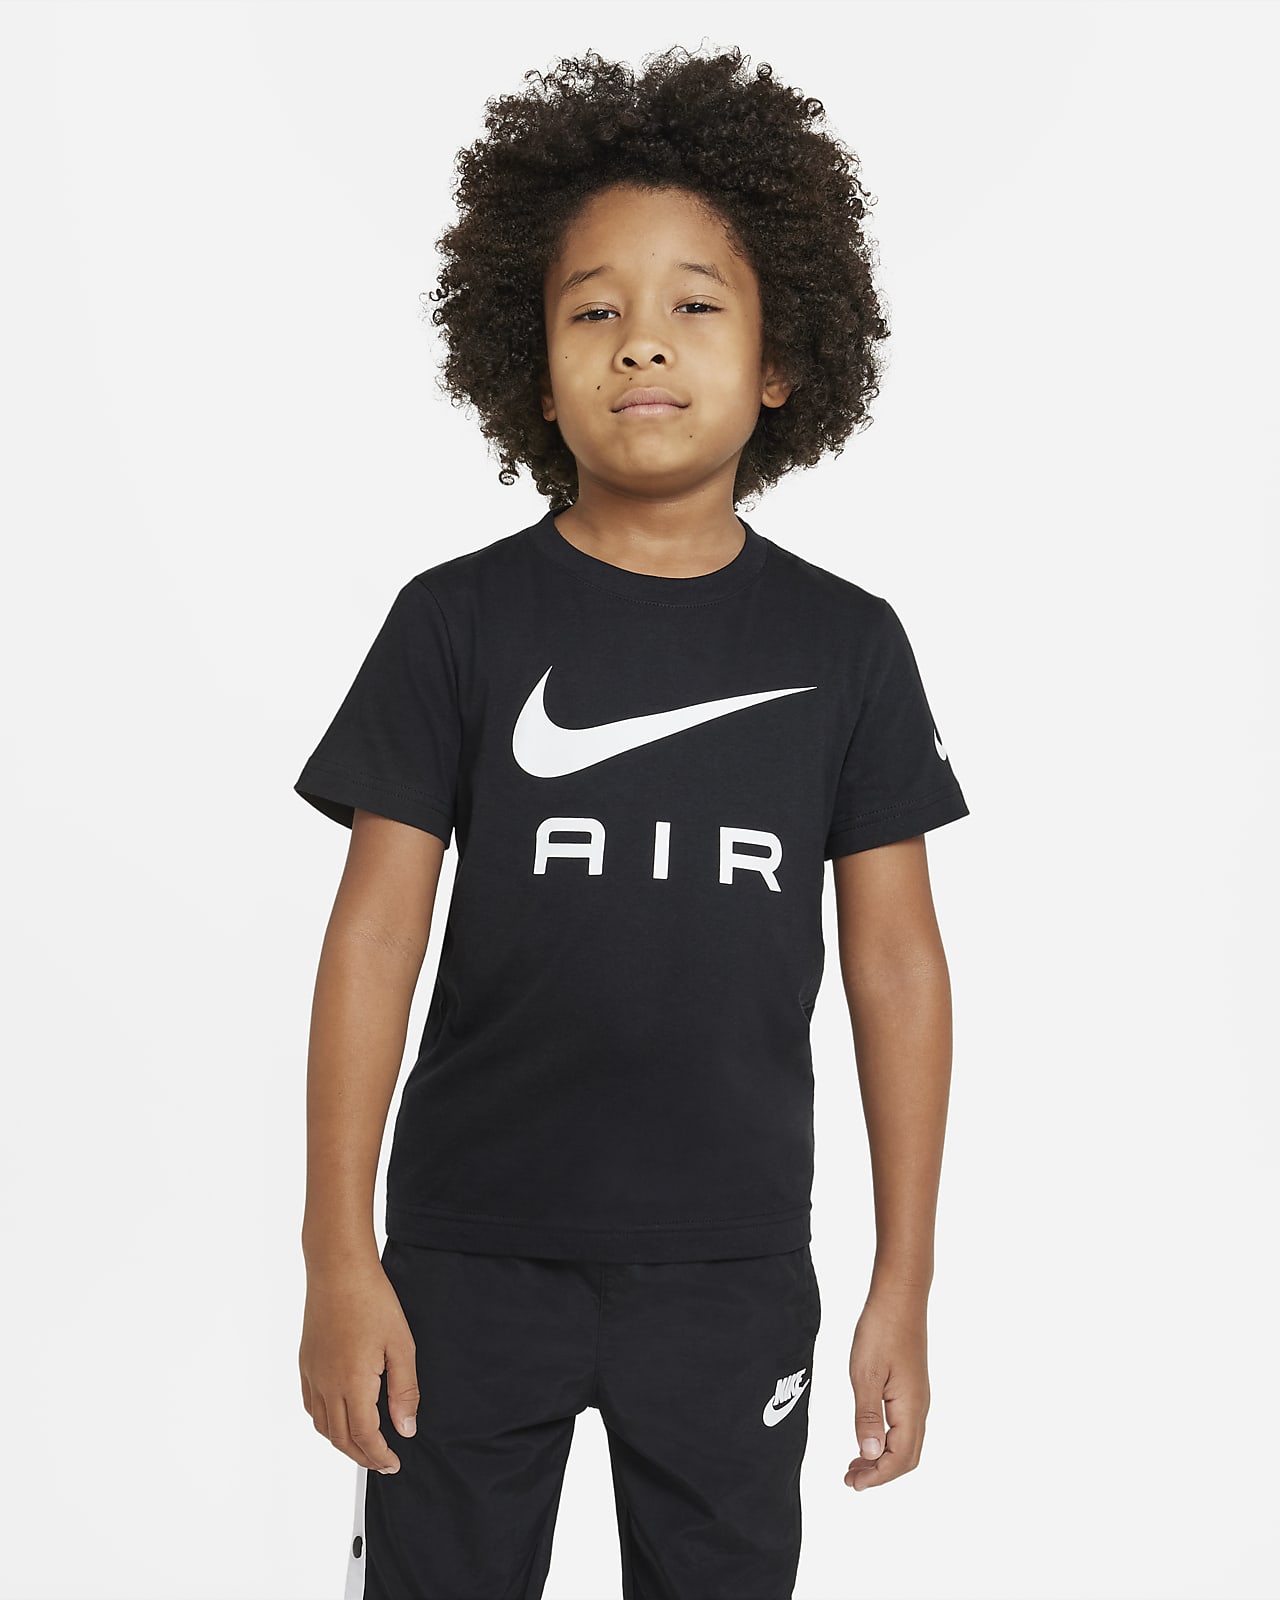 Nike Little Kids' Nike Air T-Shirt 